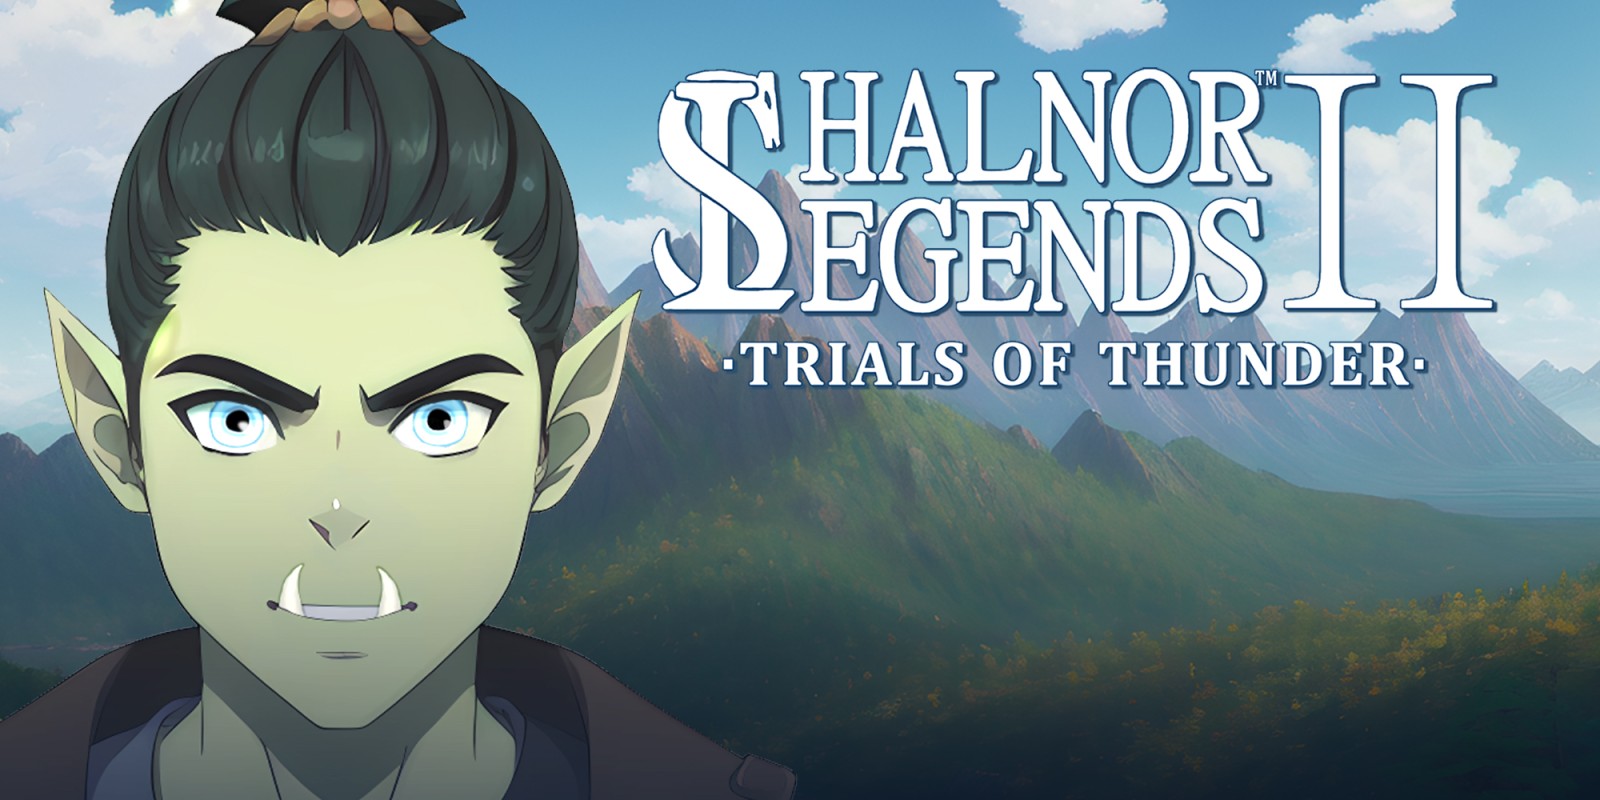 instal the last version for iphoneShalnor Legends 2: Trials of Thunder